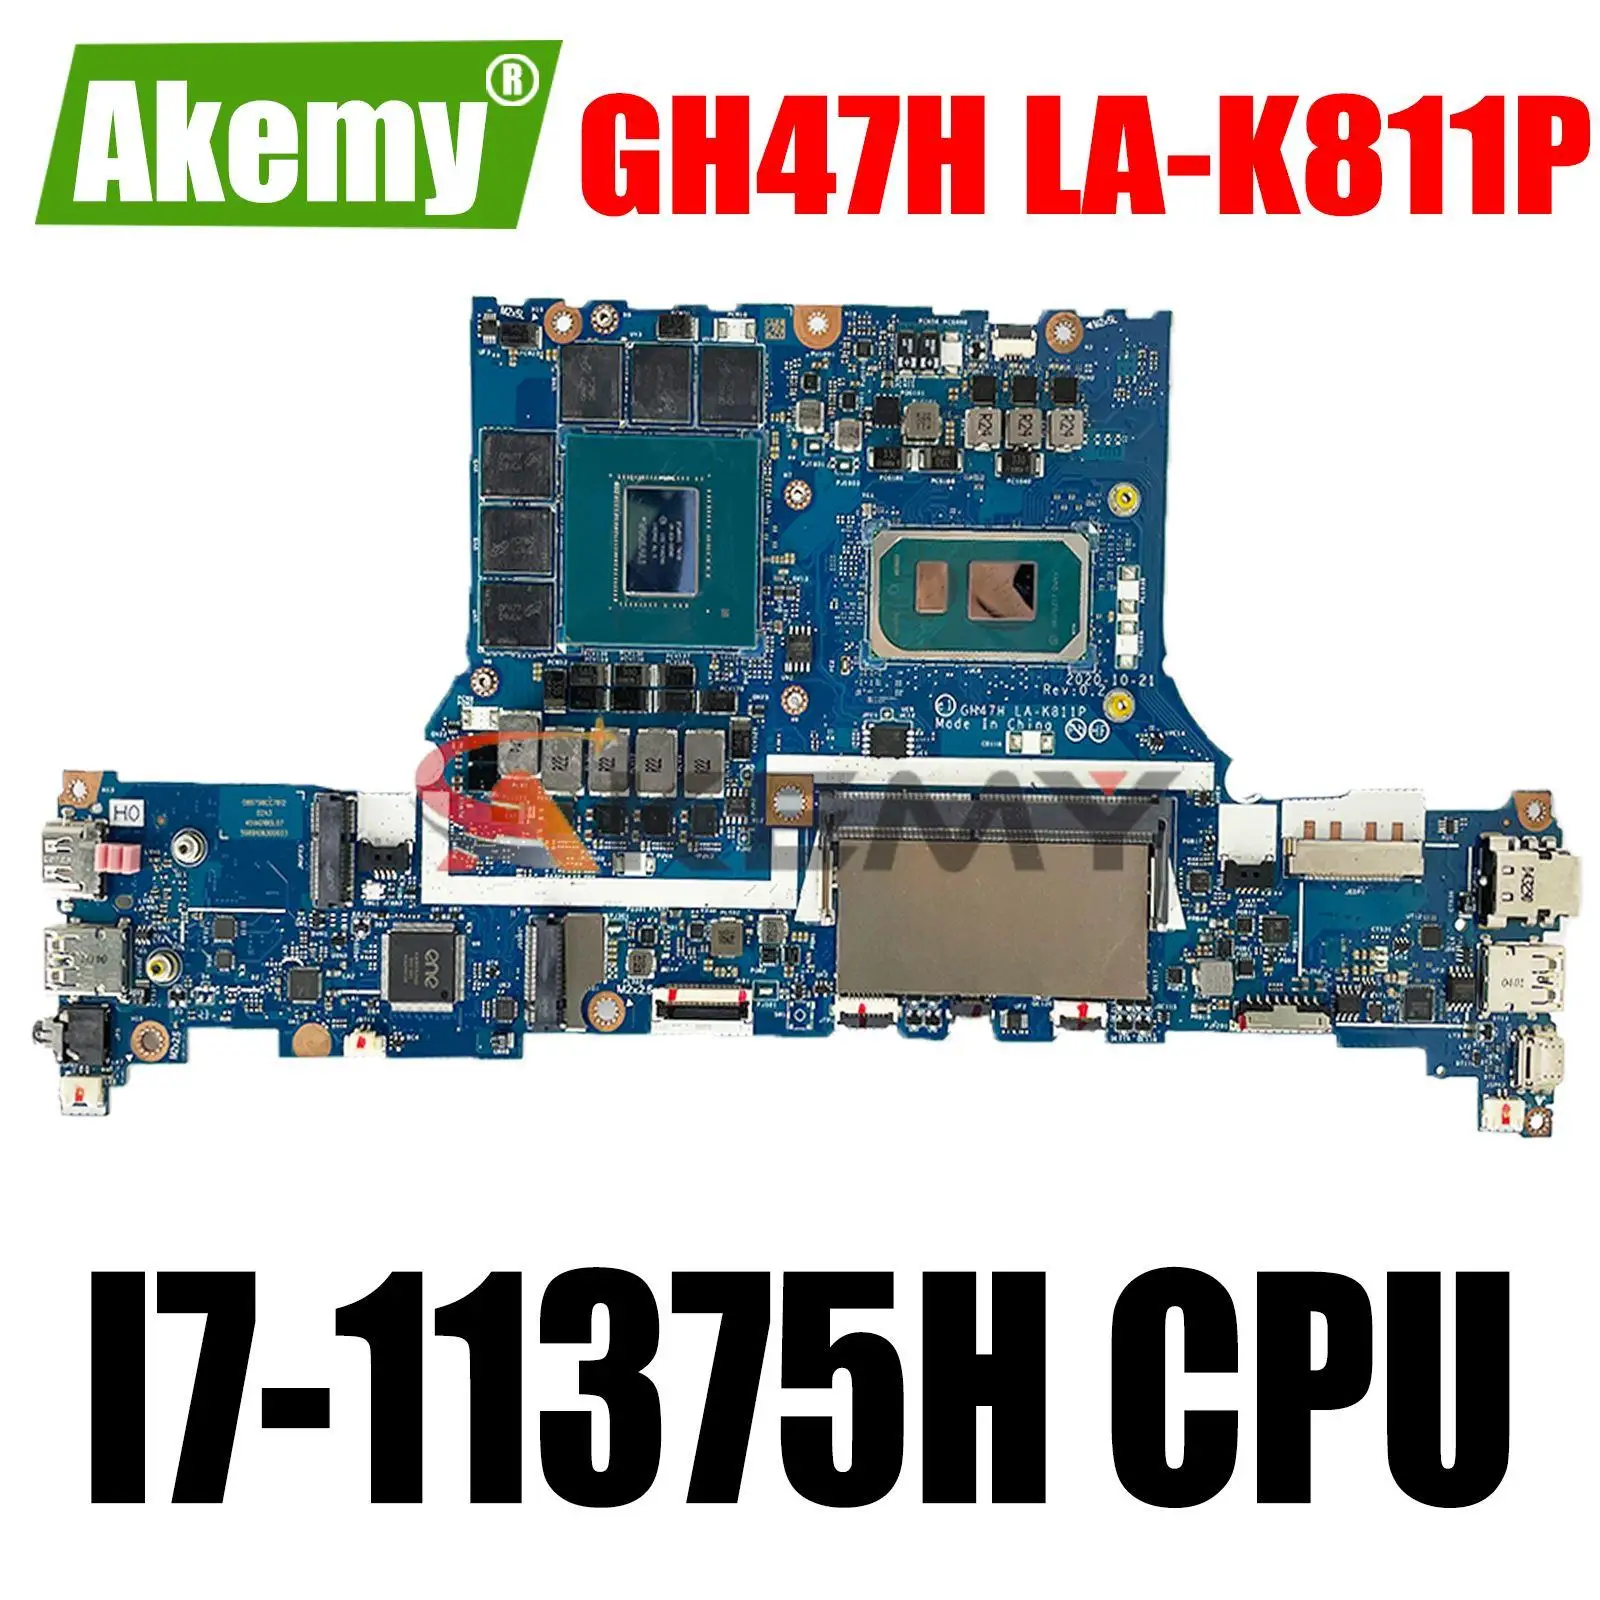 

GH47H LA-K811P Mainboard for Acer Triton 300 Laptop Motherboard CPU:I7-11375H SRKH4 GPU:GN20-E3-A1 RTX3060 8G NBQBJ11006 Test OK